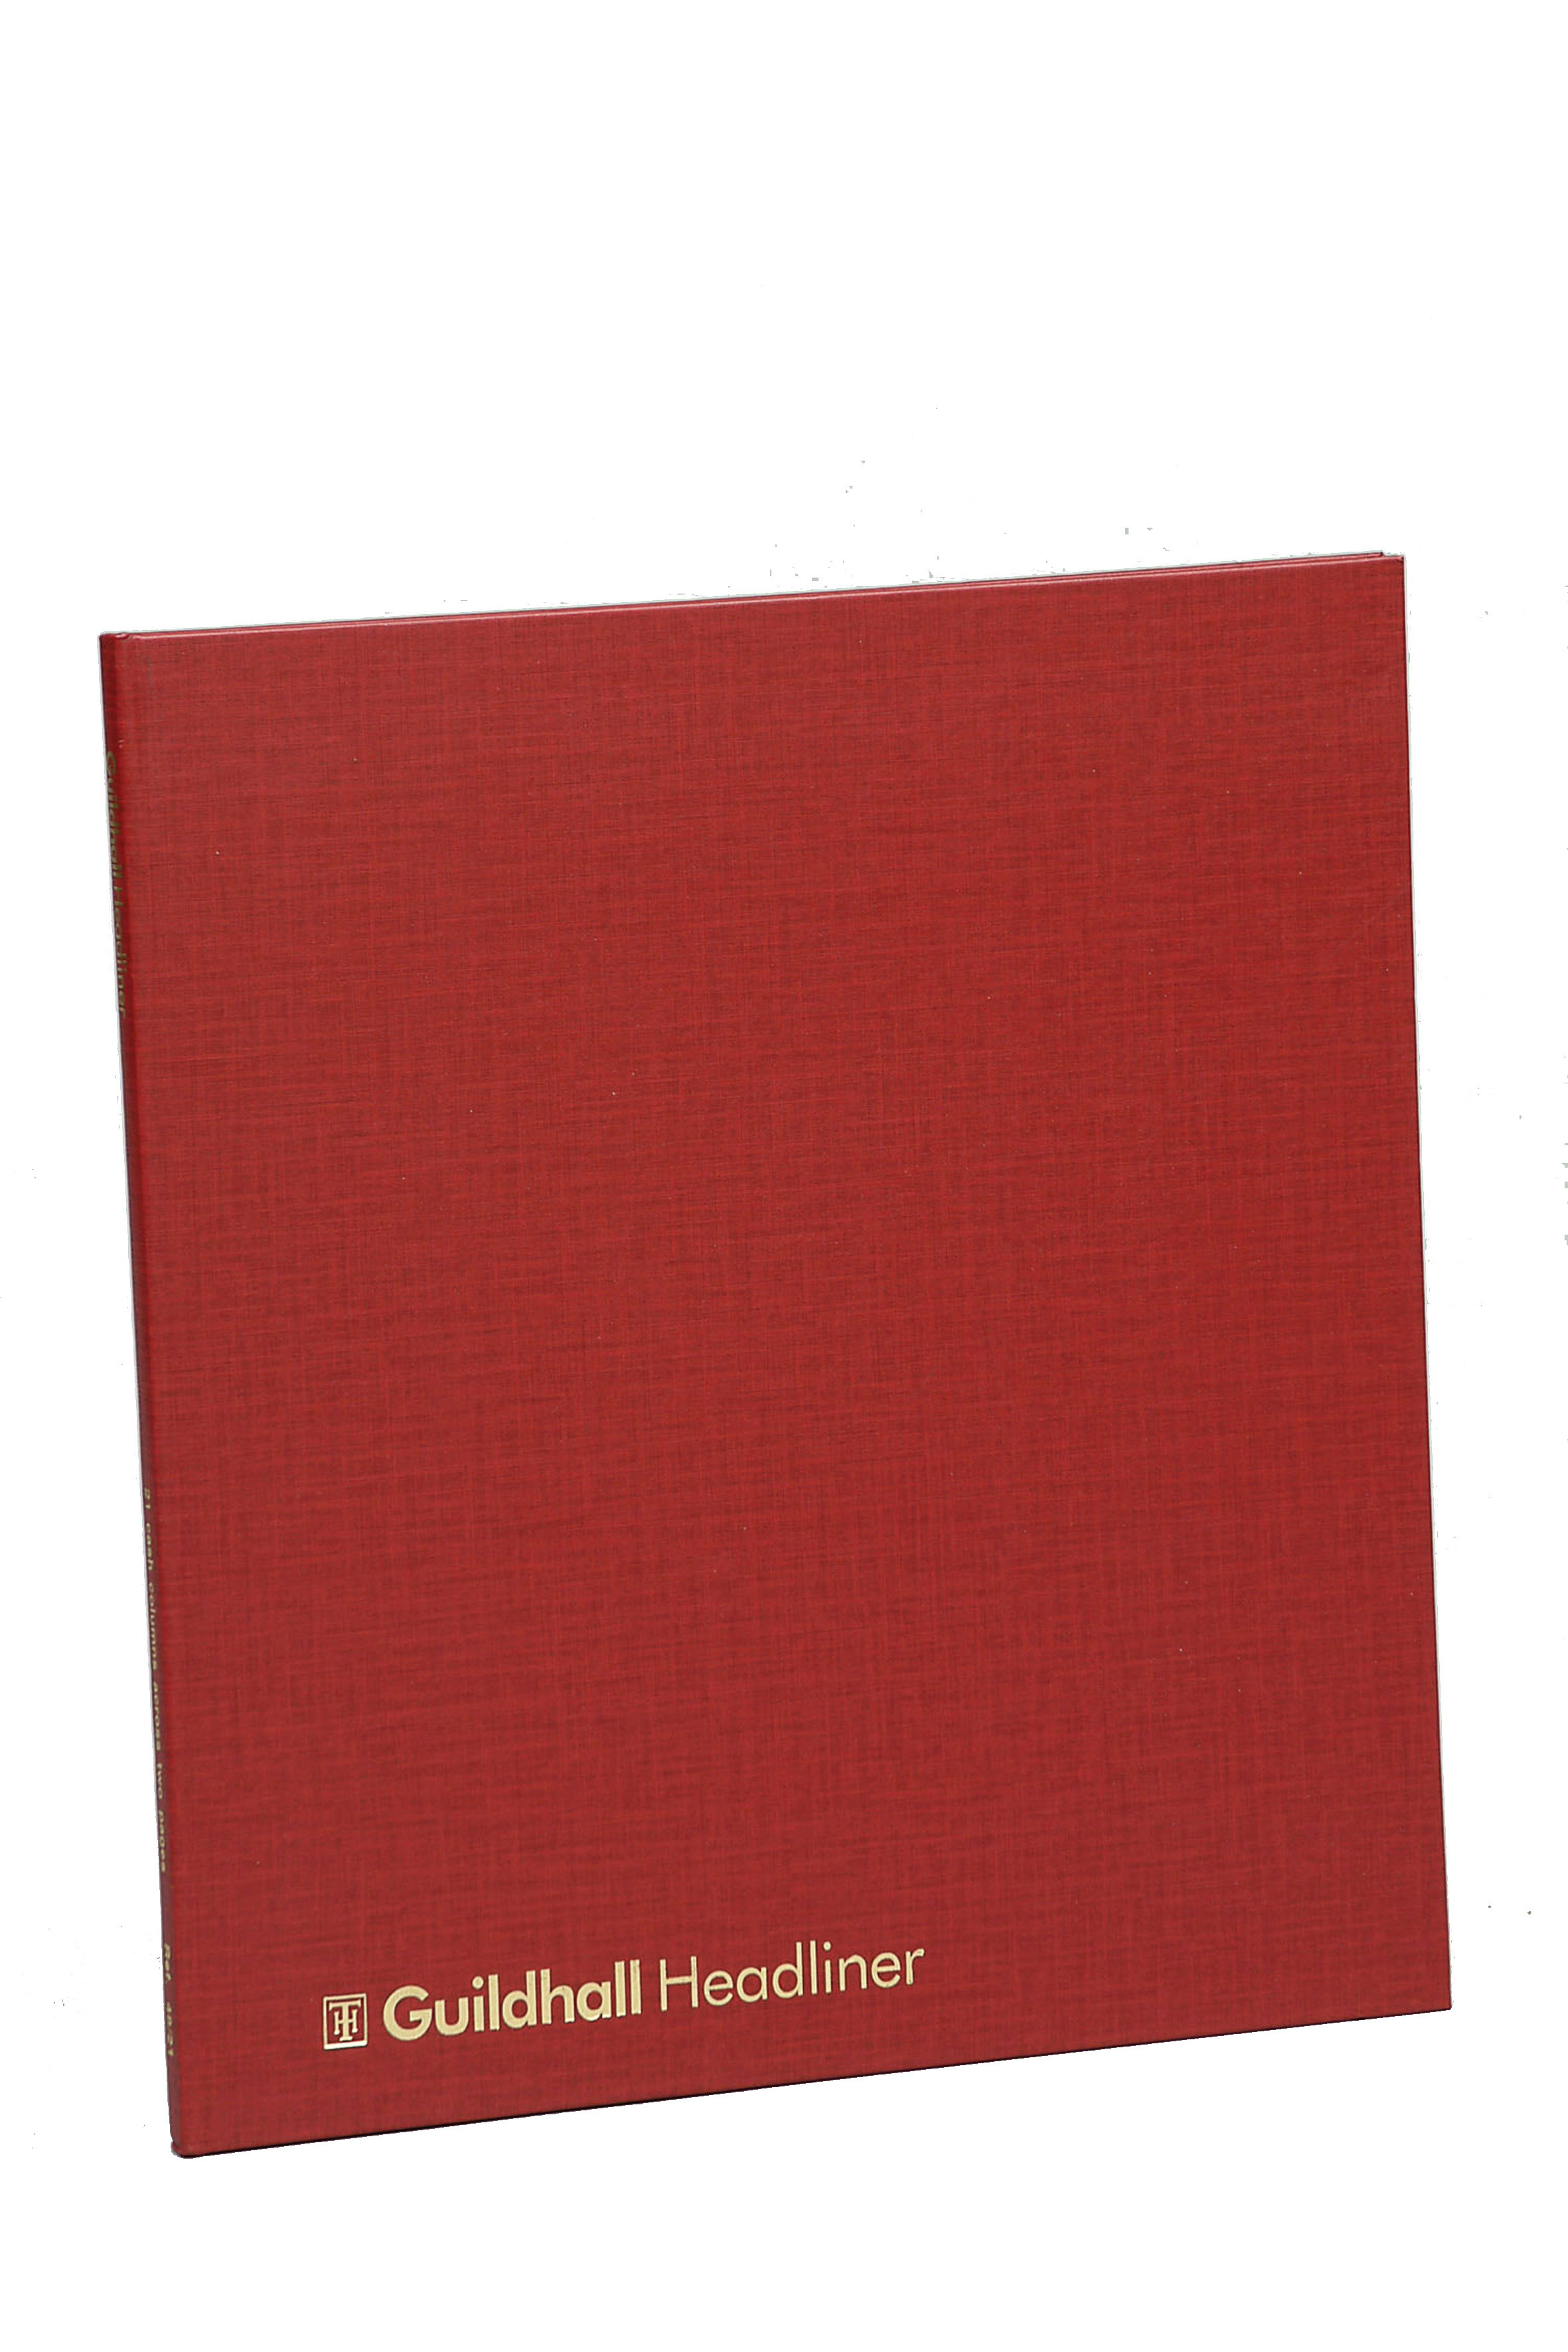 Guildhall Headliner Account Book Casebound 298x273mm 4 Debit 12 Credit 80 Pages Red